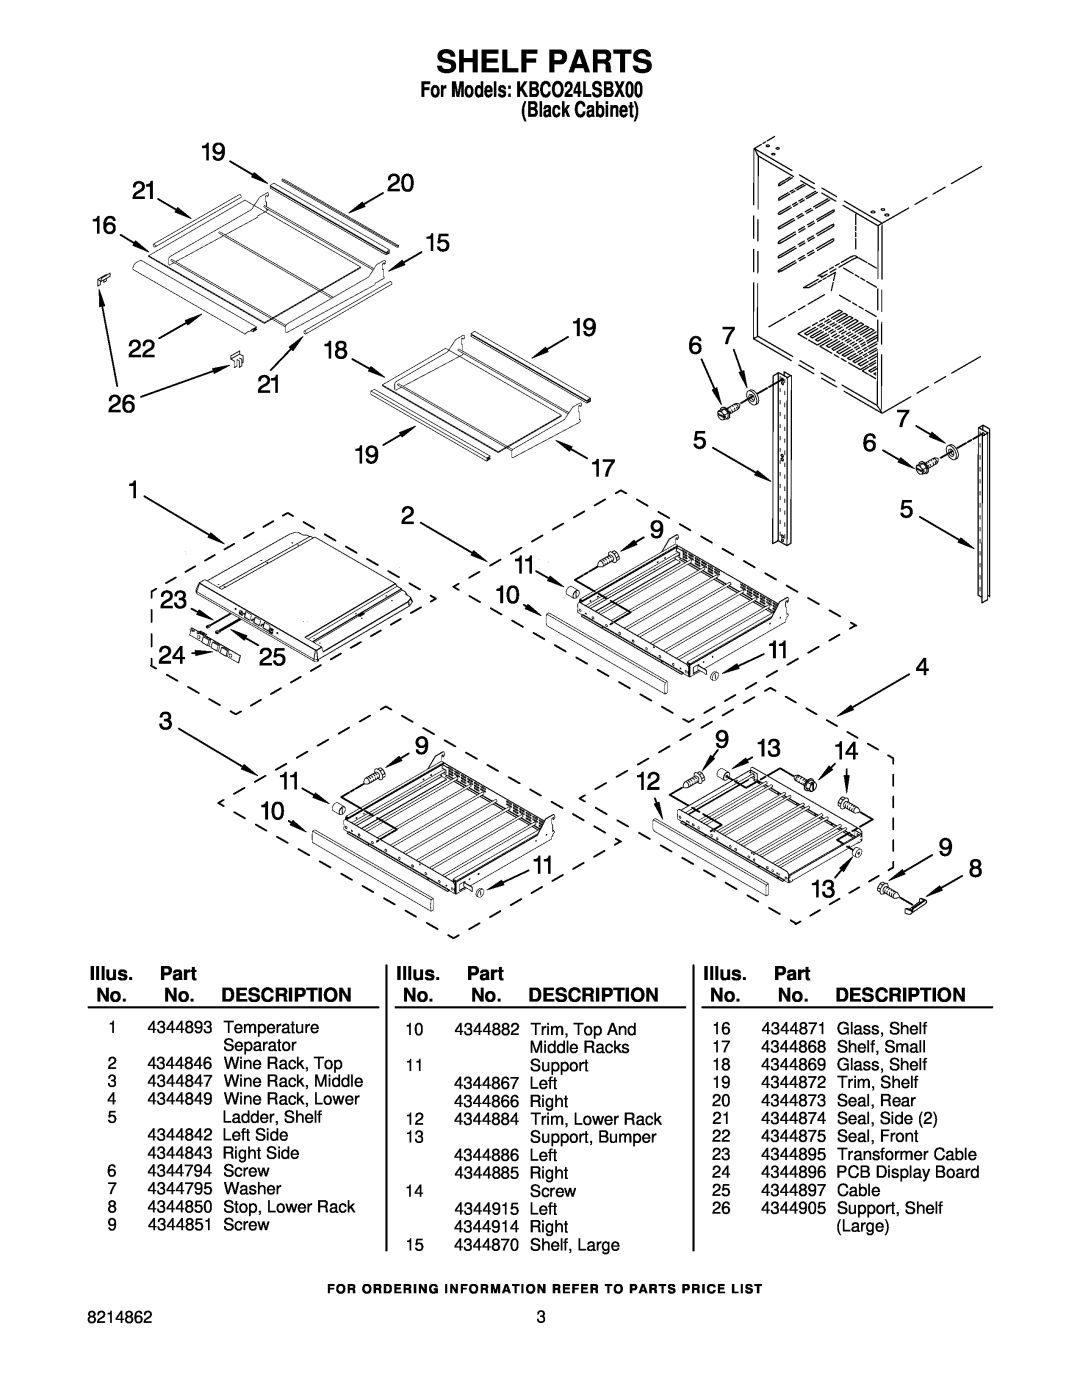 KitchenAid KBCO24LSBX00 manual Shelf Parts, Illus. Part No. No. DESCRIPTION 